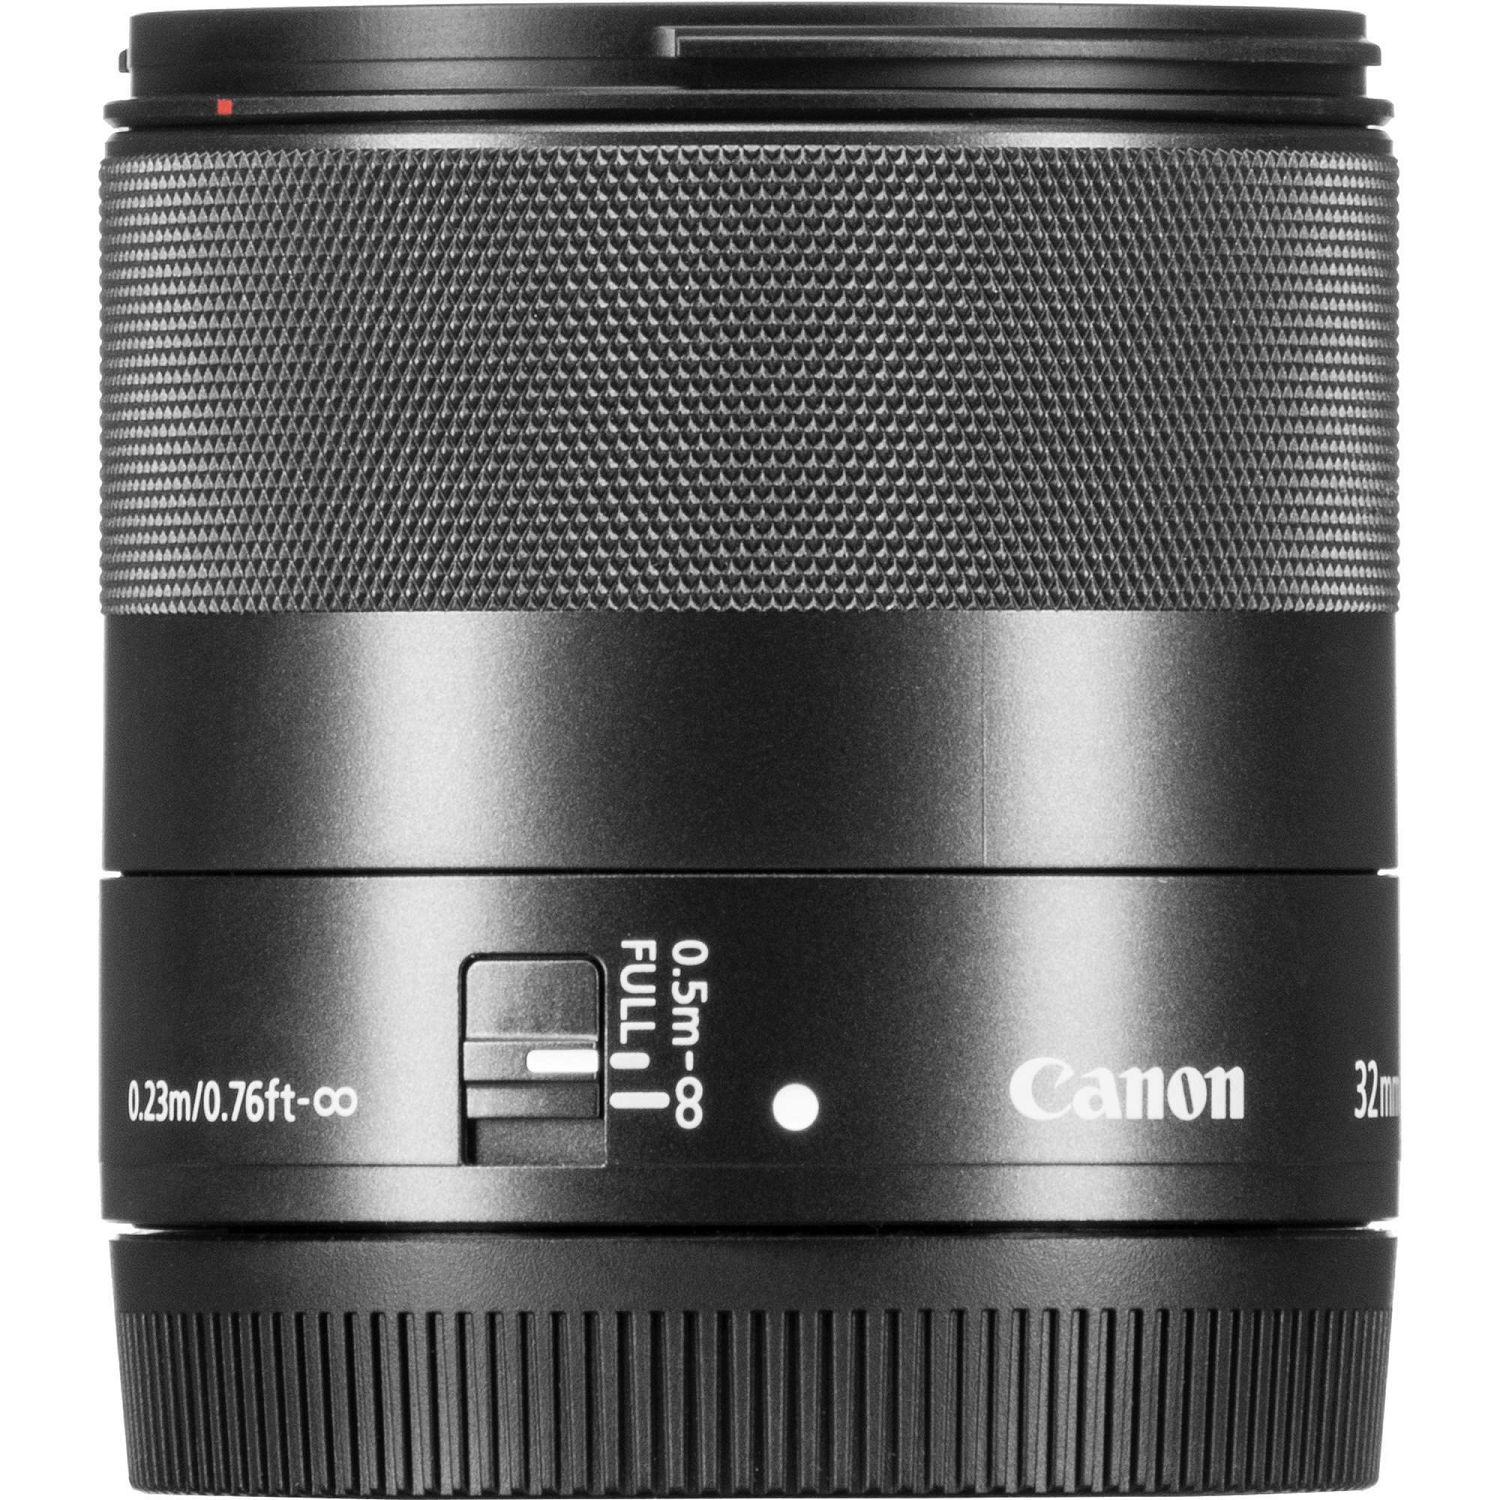 Canon EF-M 32mm f/1.4 STM Black objektiv (2439C005AA)